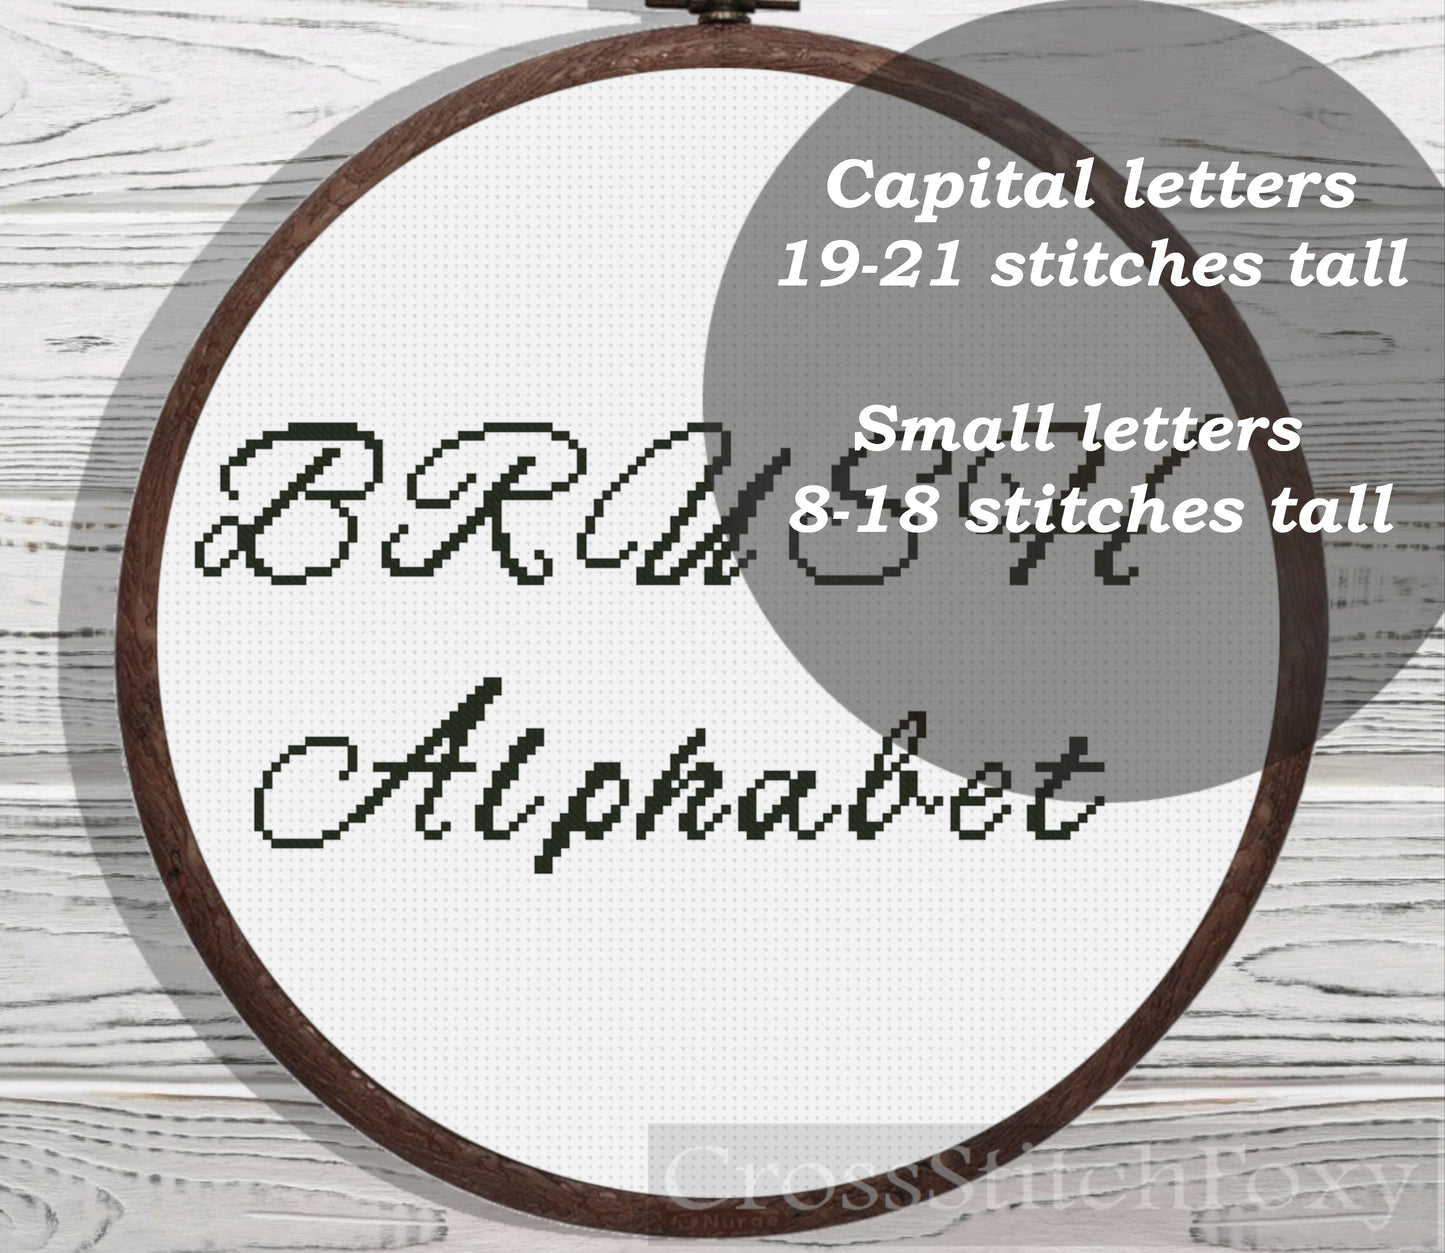 Brush Alphabet cross stitch pattern